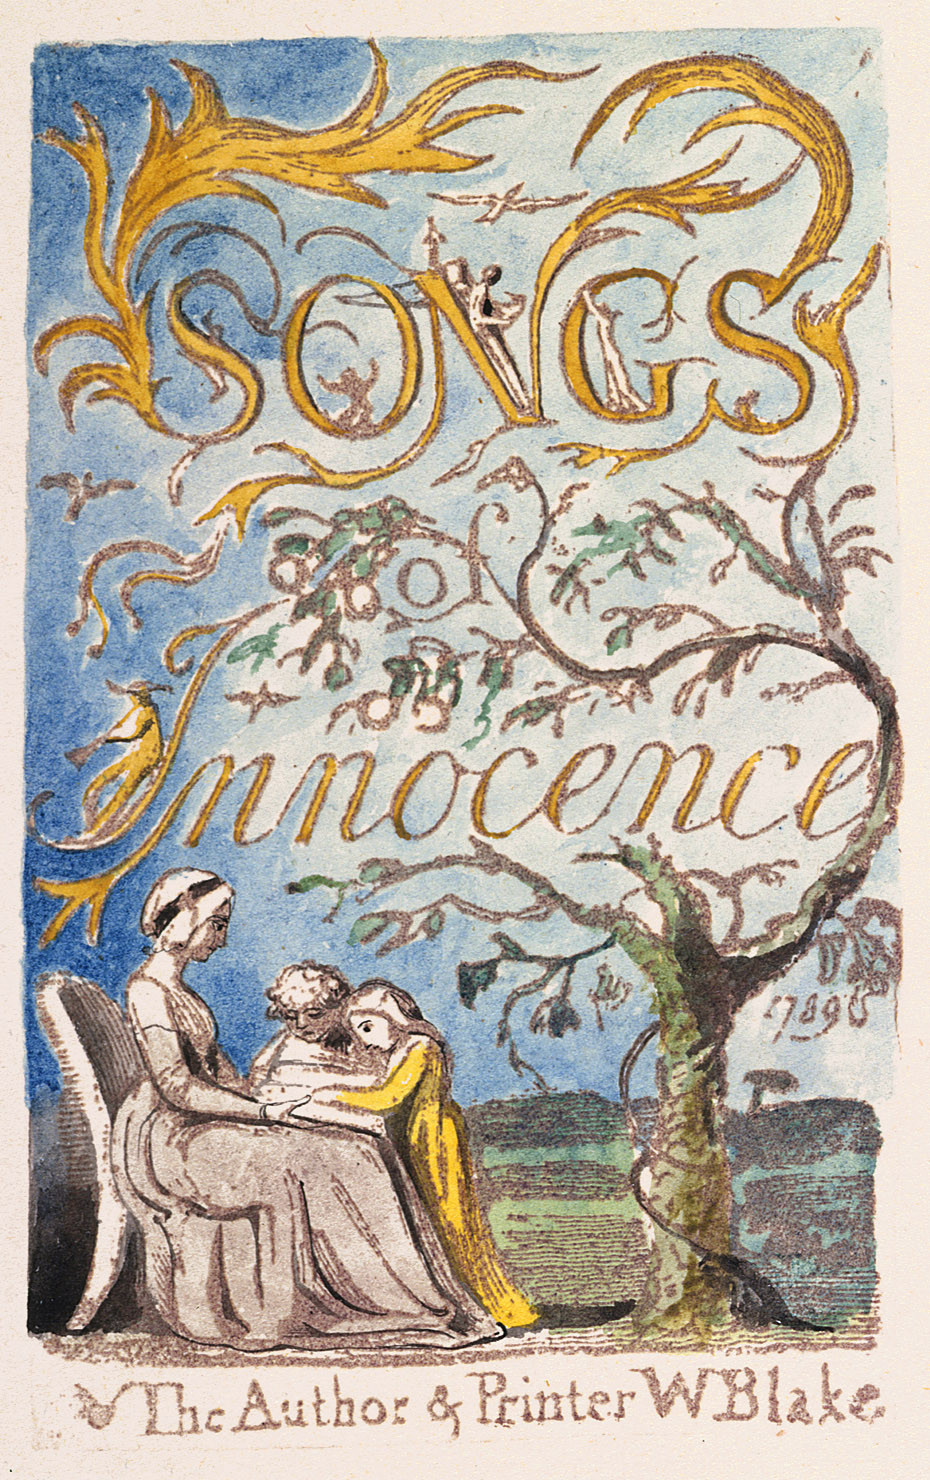 SONGS
	of
	Innocence
	1789
	The Author & Printer WBlake